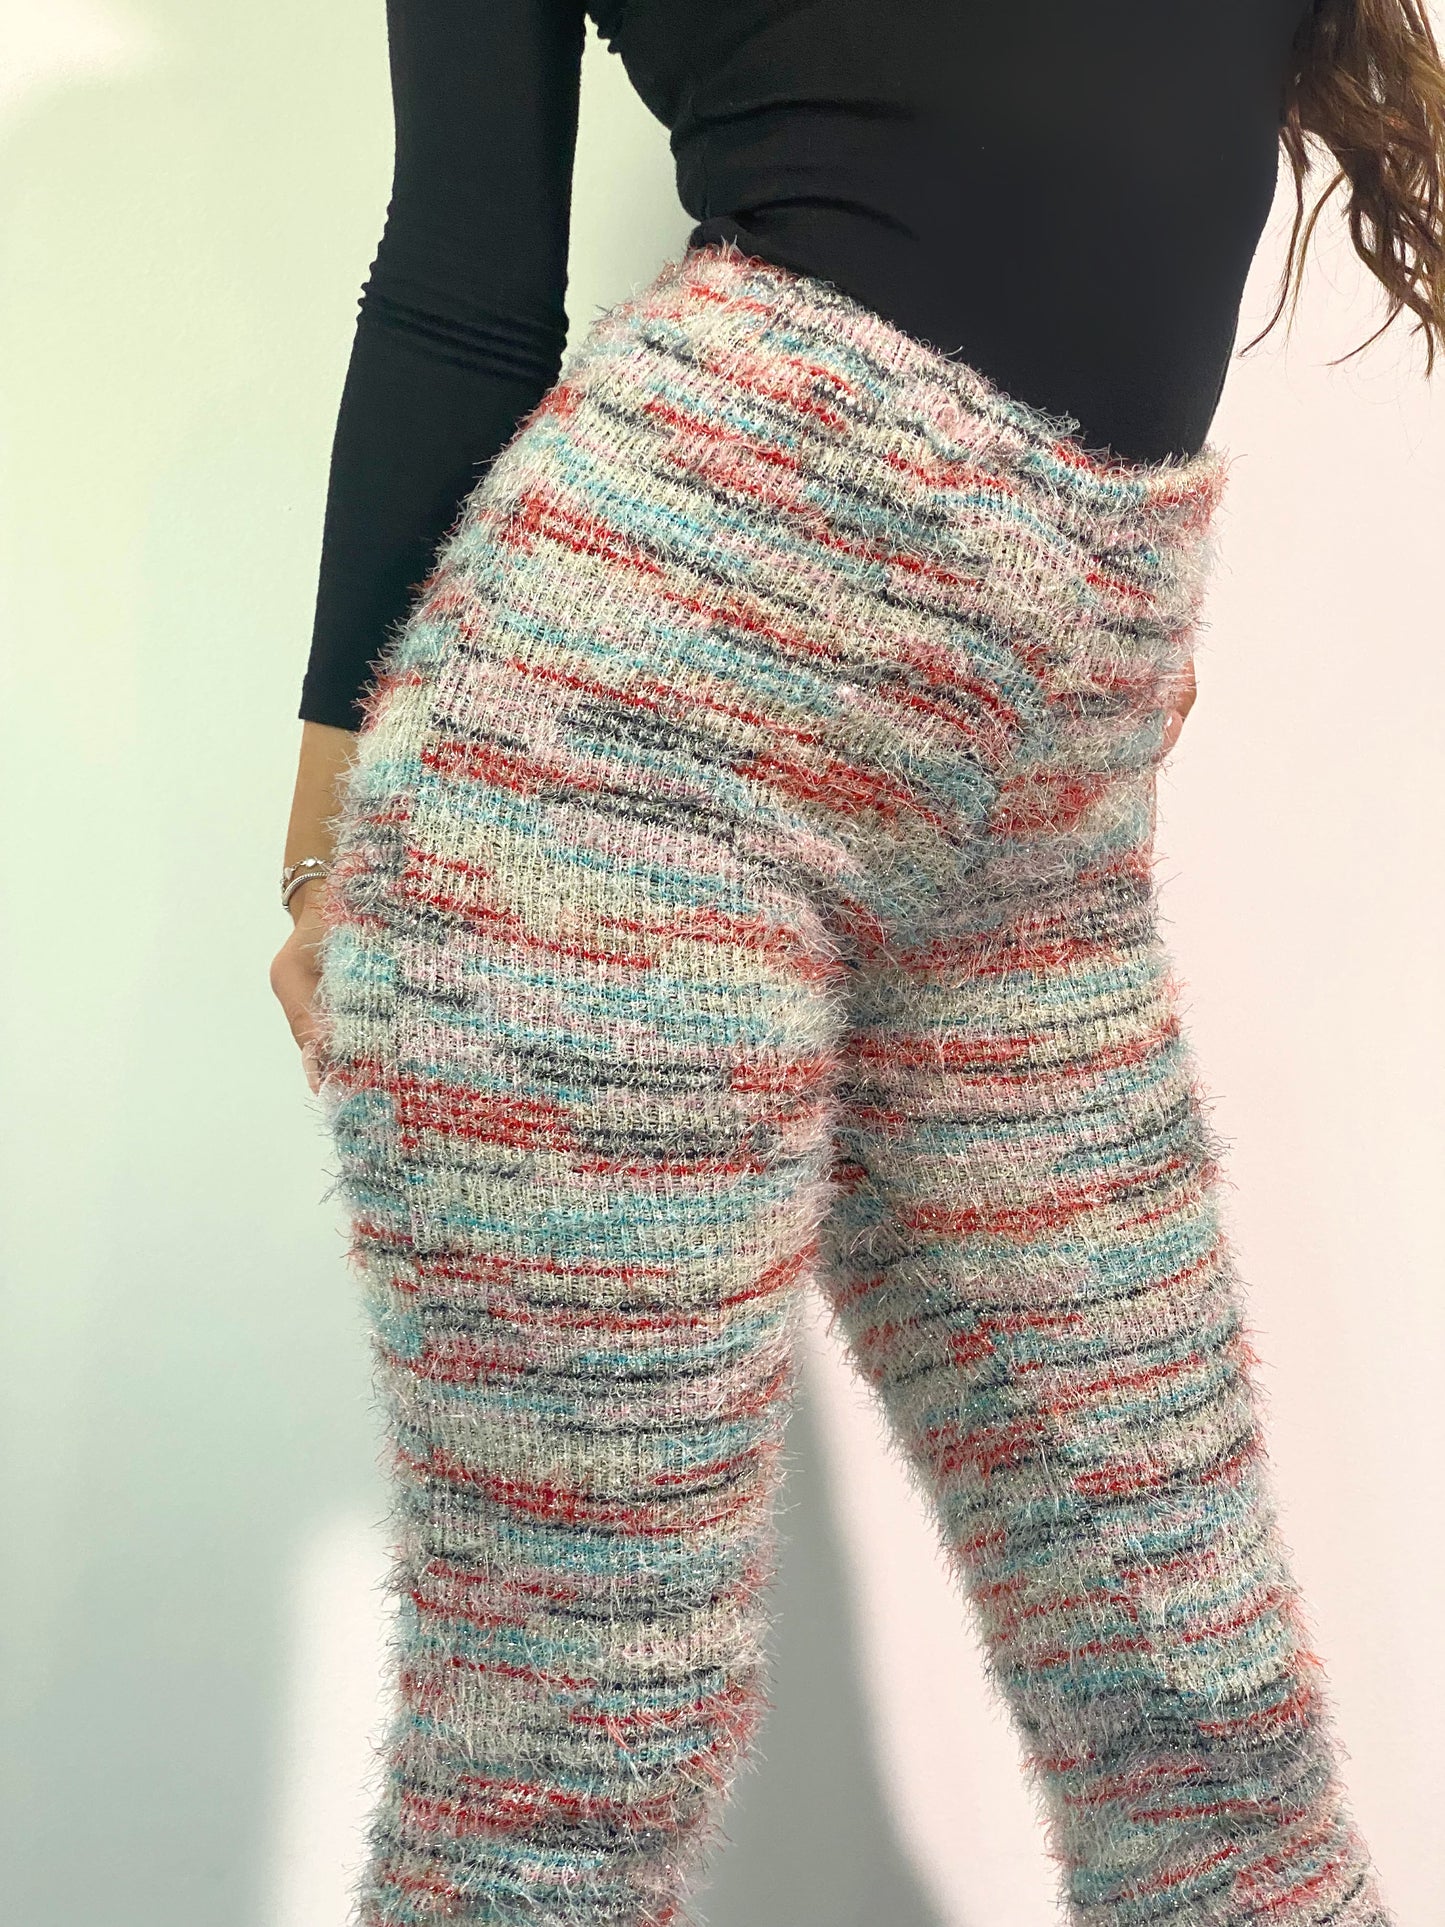 Pantaloni 'Fluffy Colorful' - Pantaloni dama evazati multicolori